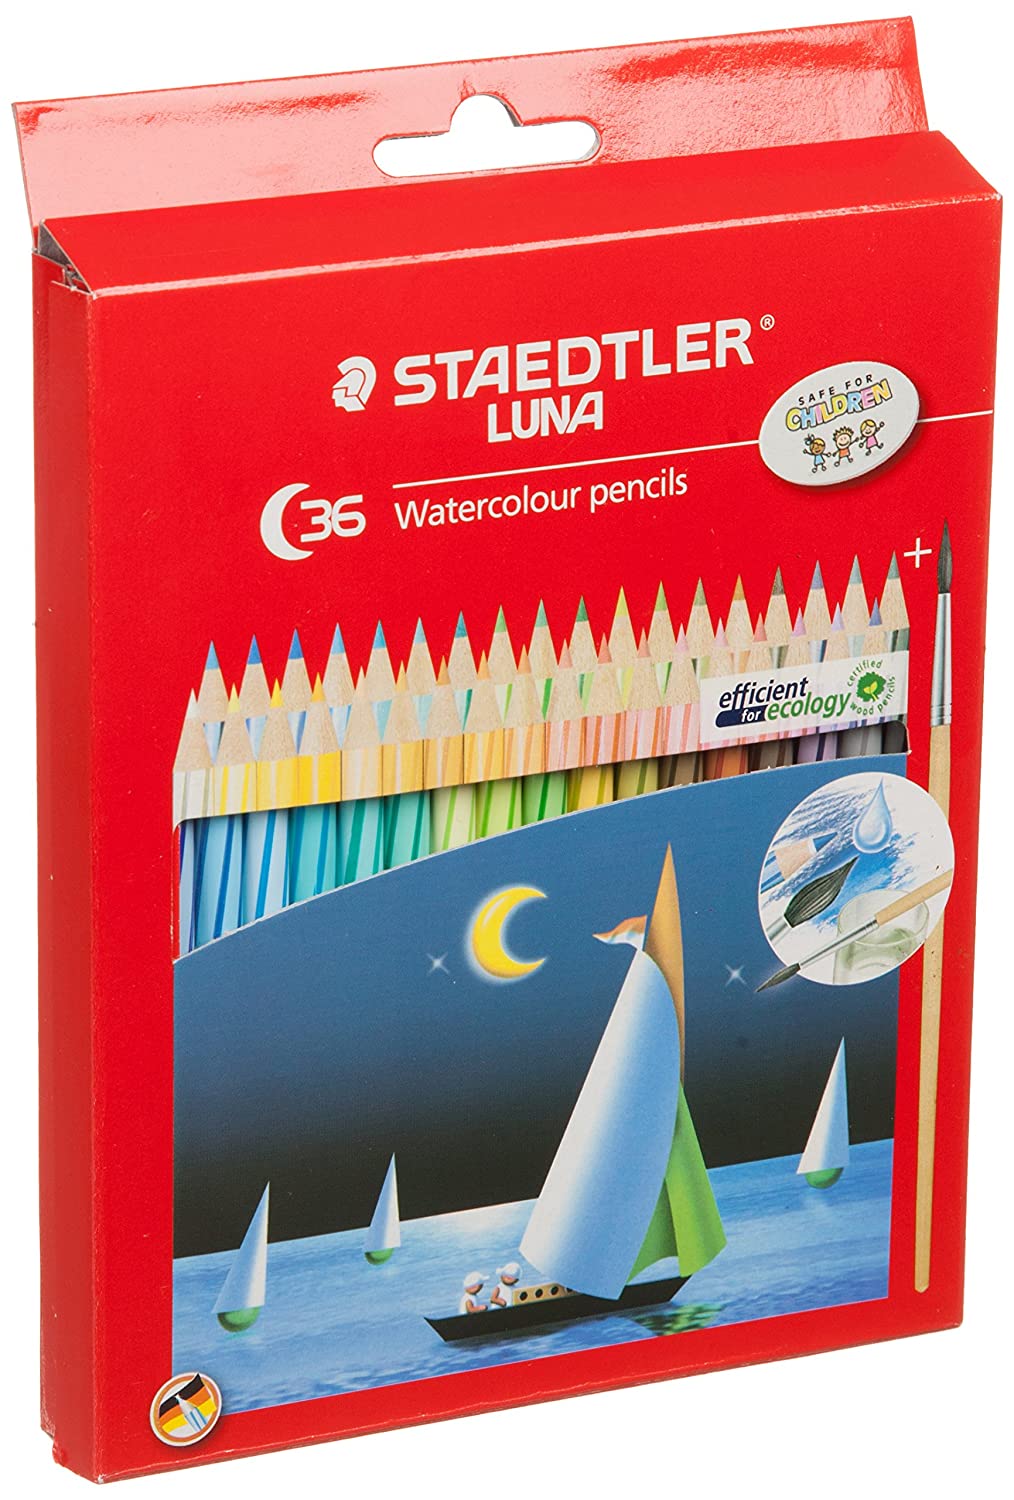 Detec™ Staedtler Luna Aquarelle Water Color Pencil, 36 Shades with Catalogue & Mechanical Pencil